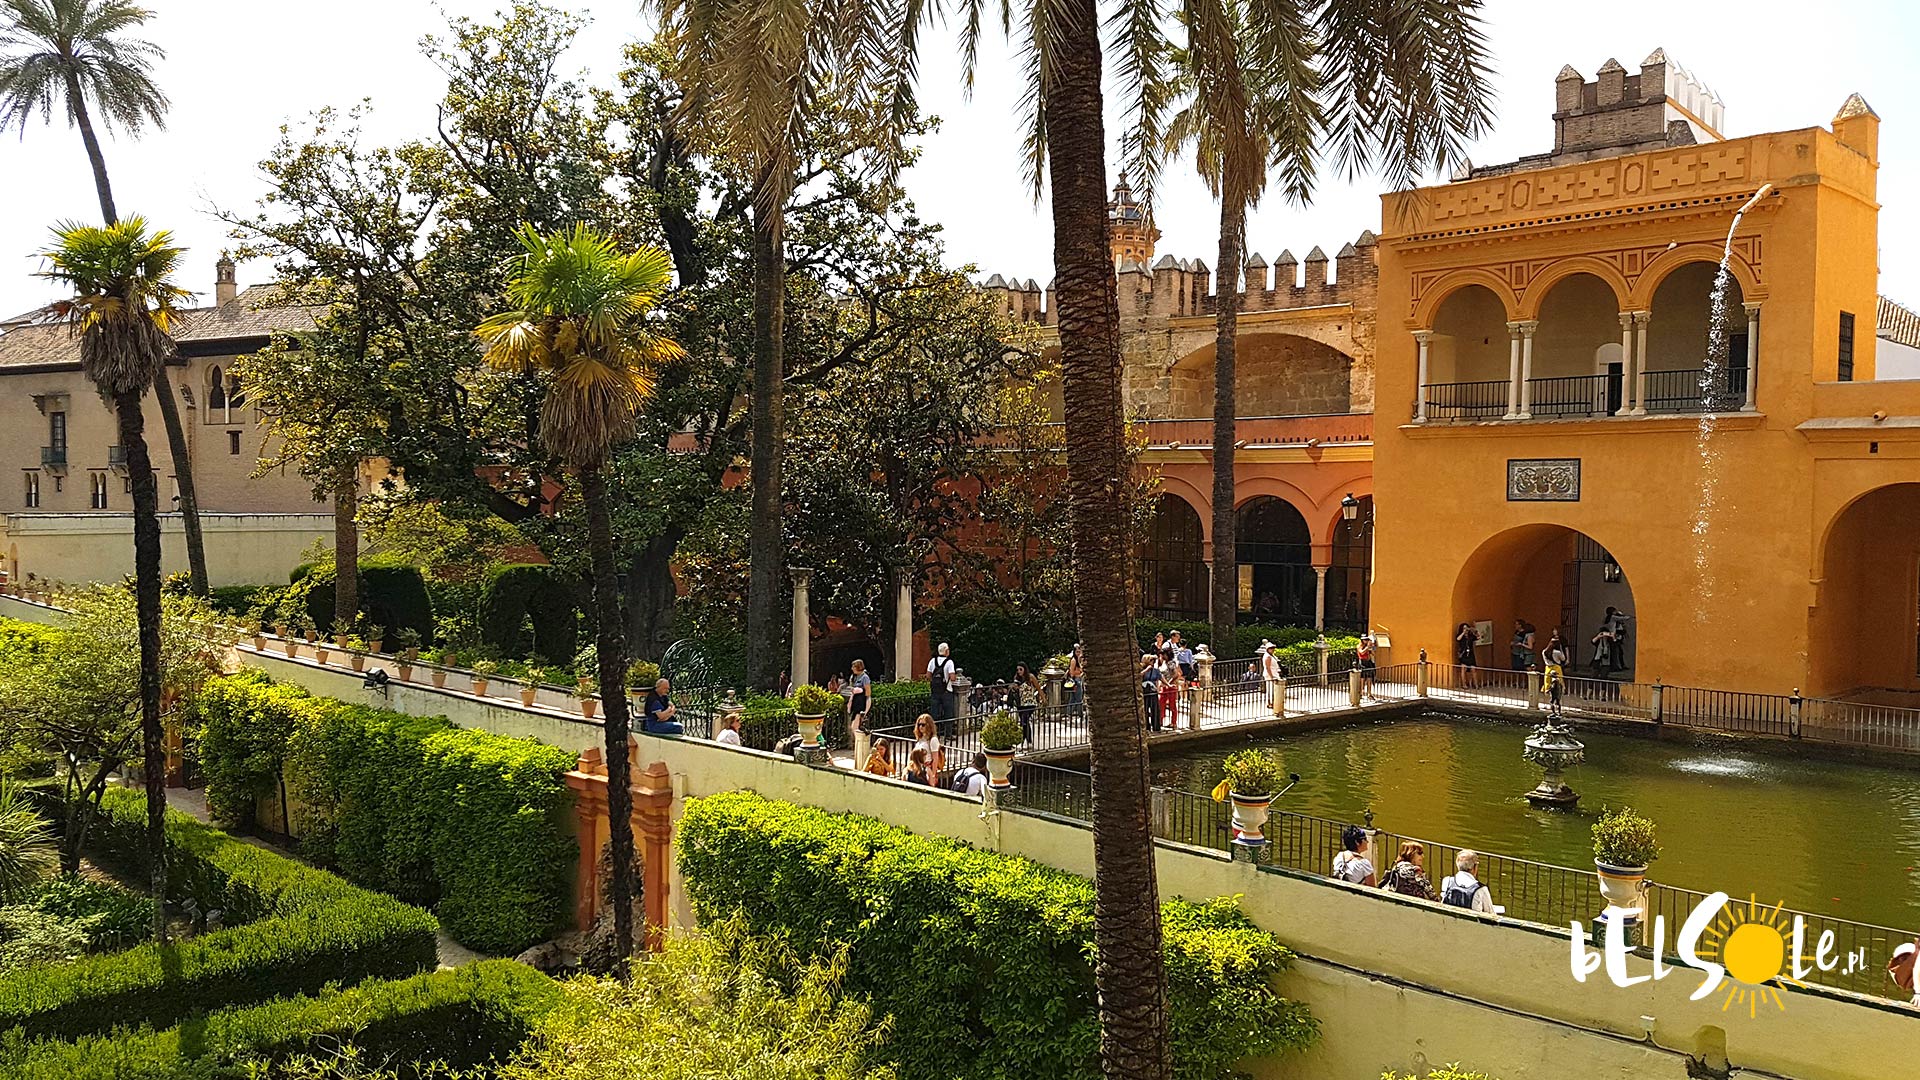 Real Alcazar Seville